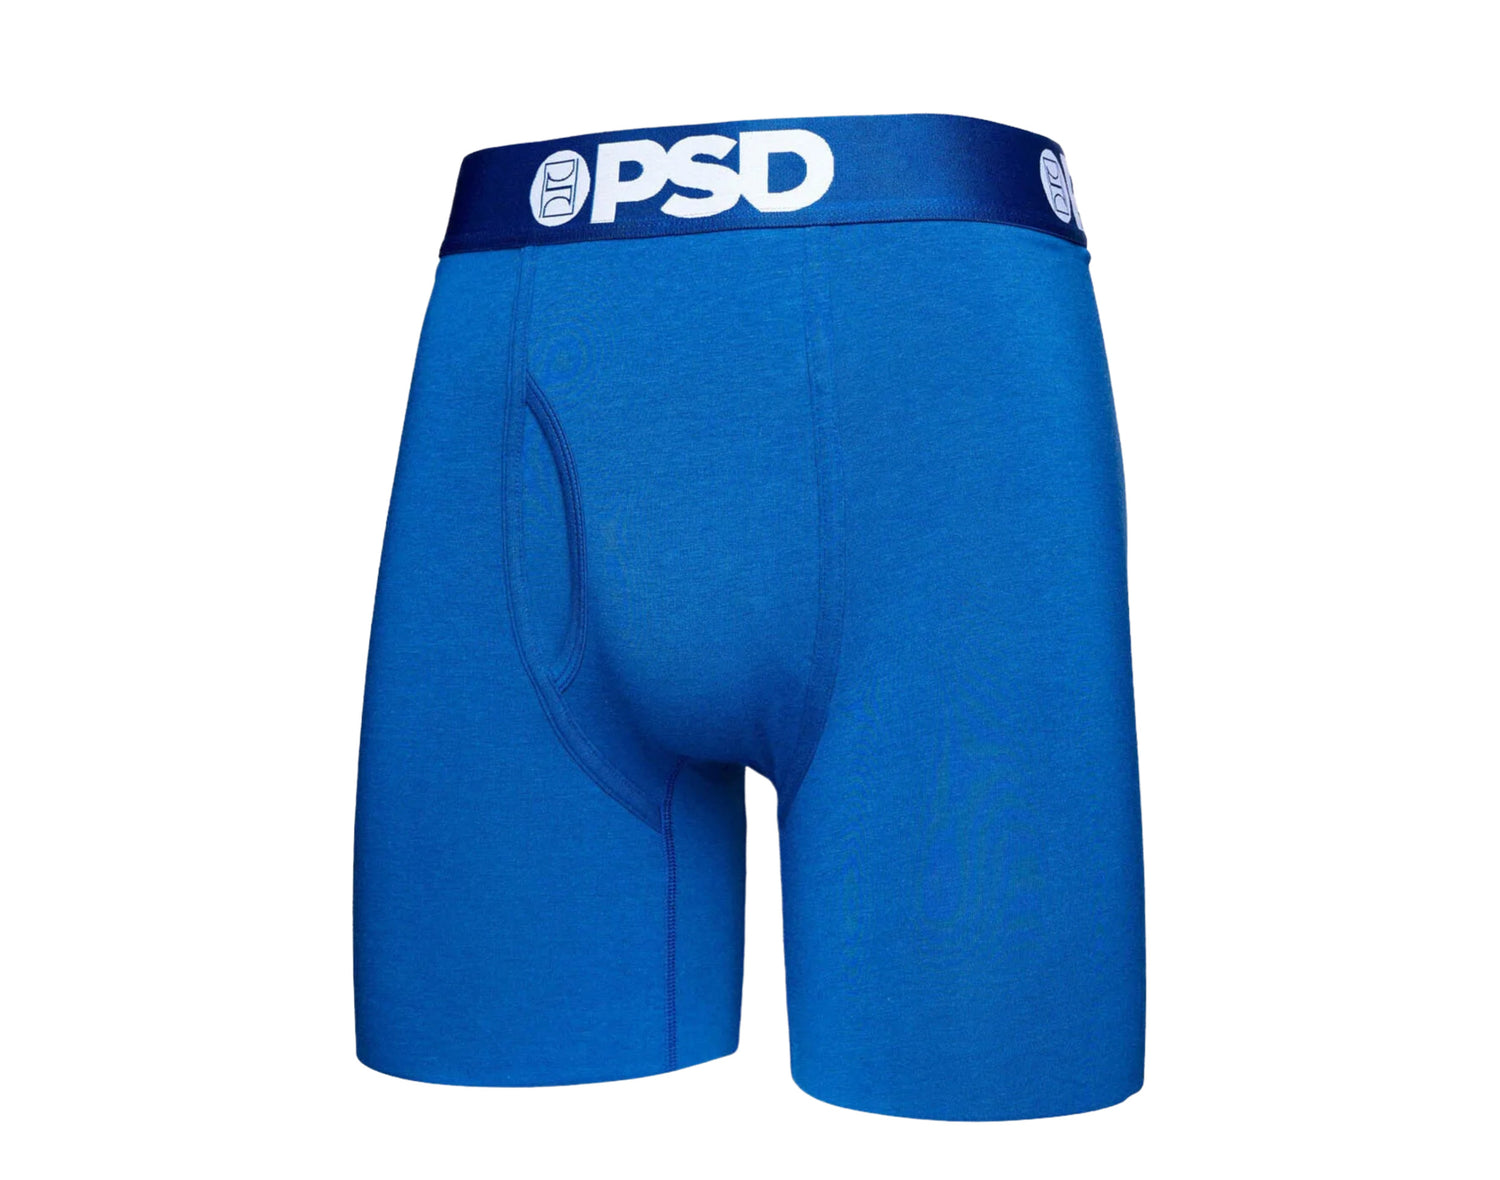 PSD Tropical Modal - 3-Pack Boxer Briefs Men's Underwear